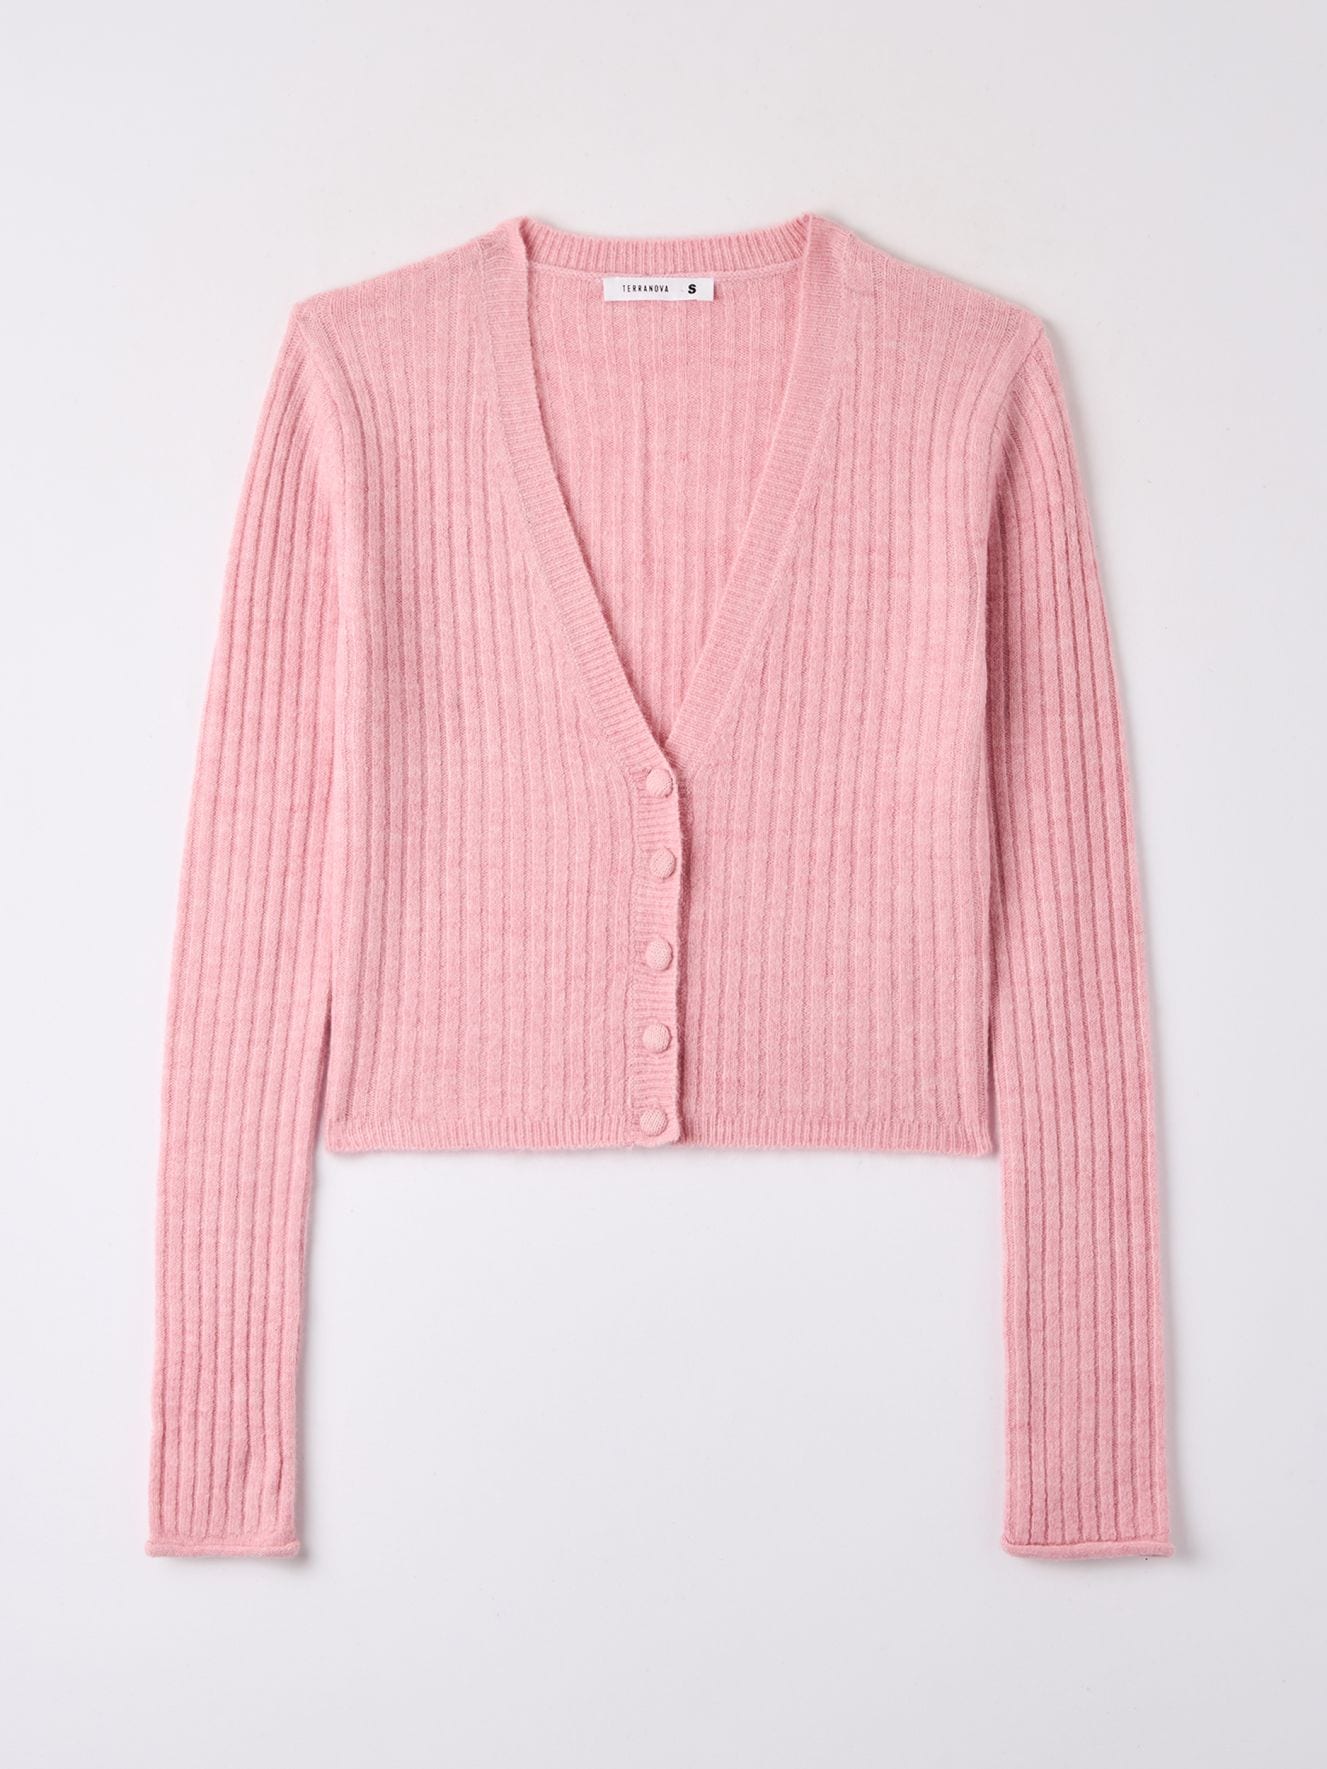 Amarti Strickjacke DAMEN Pullovers & Sweatshirts NO STYLE Rabatt 97 % Rosa S 